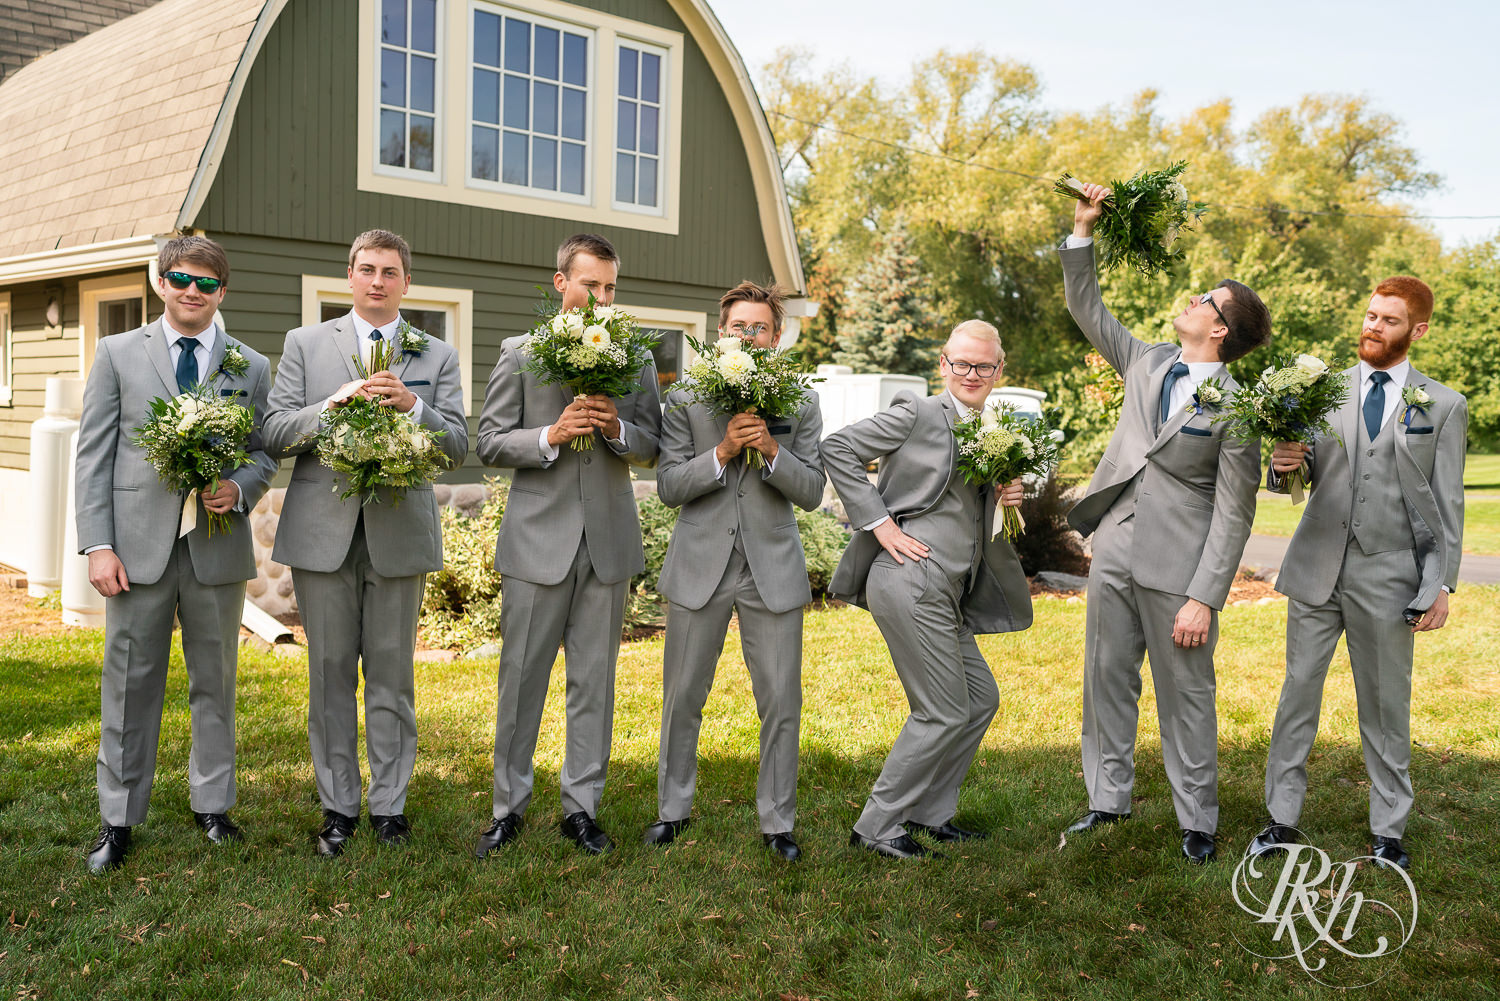 Groomsmen posing with flowers in gray suits.